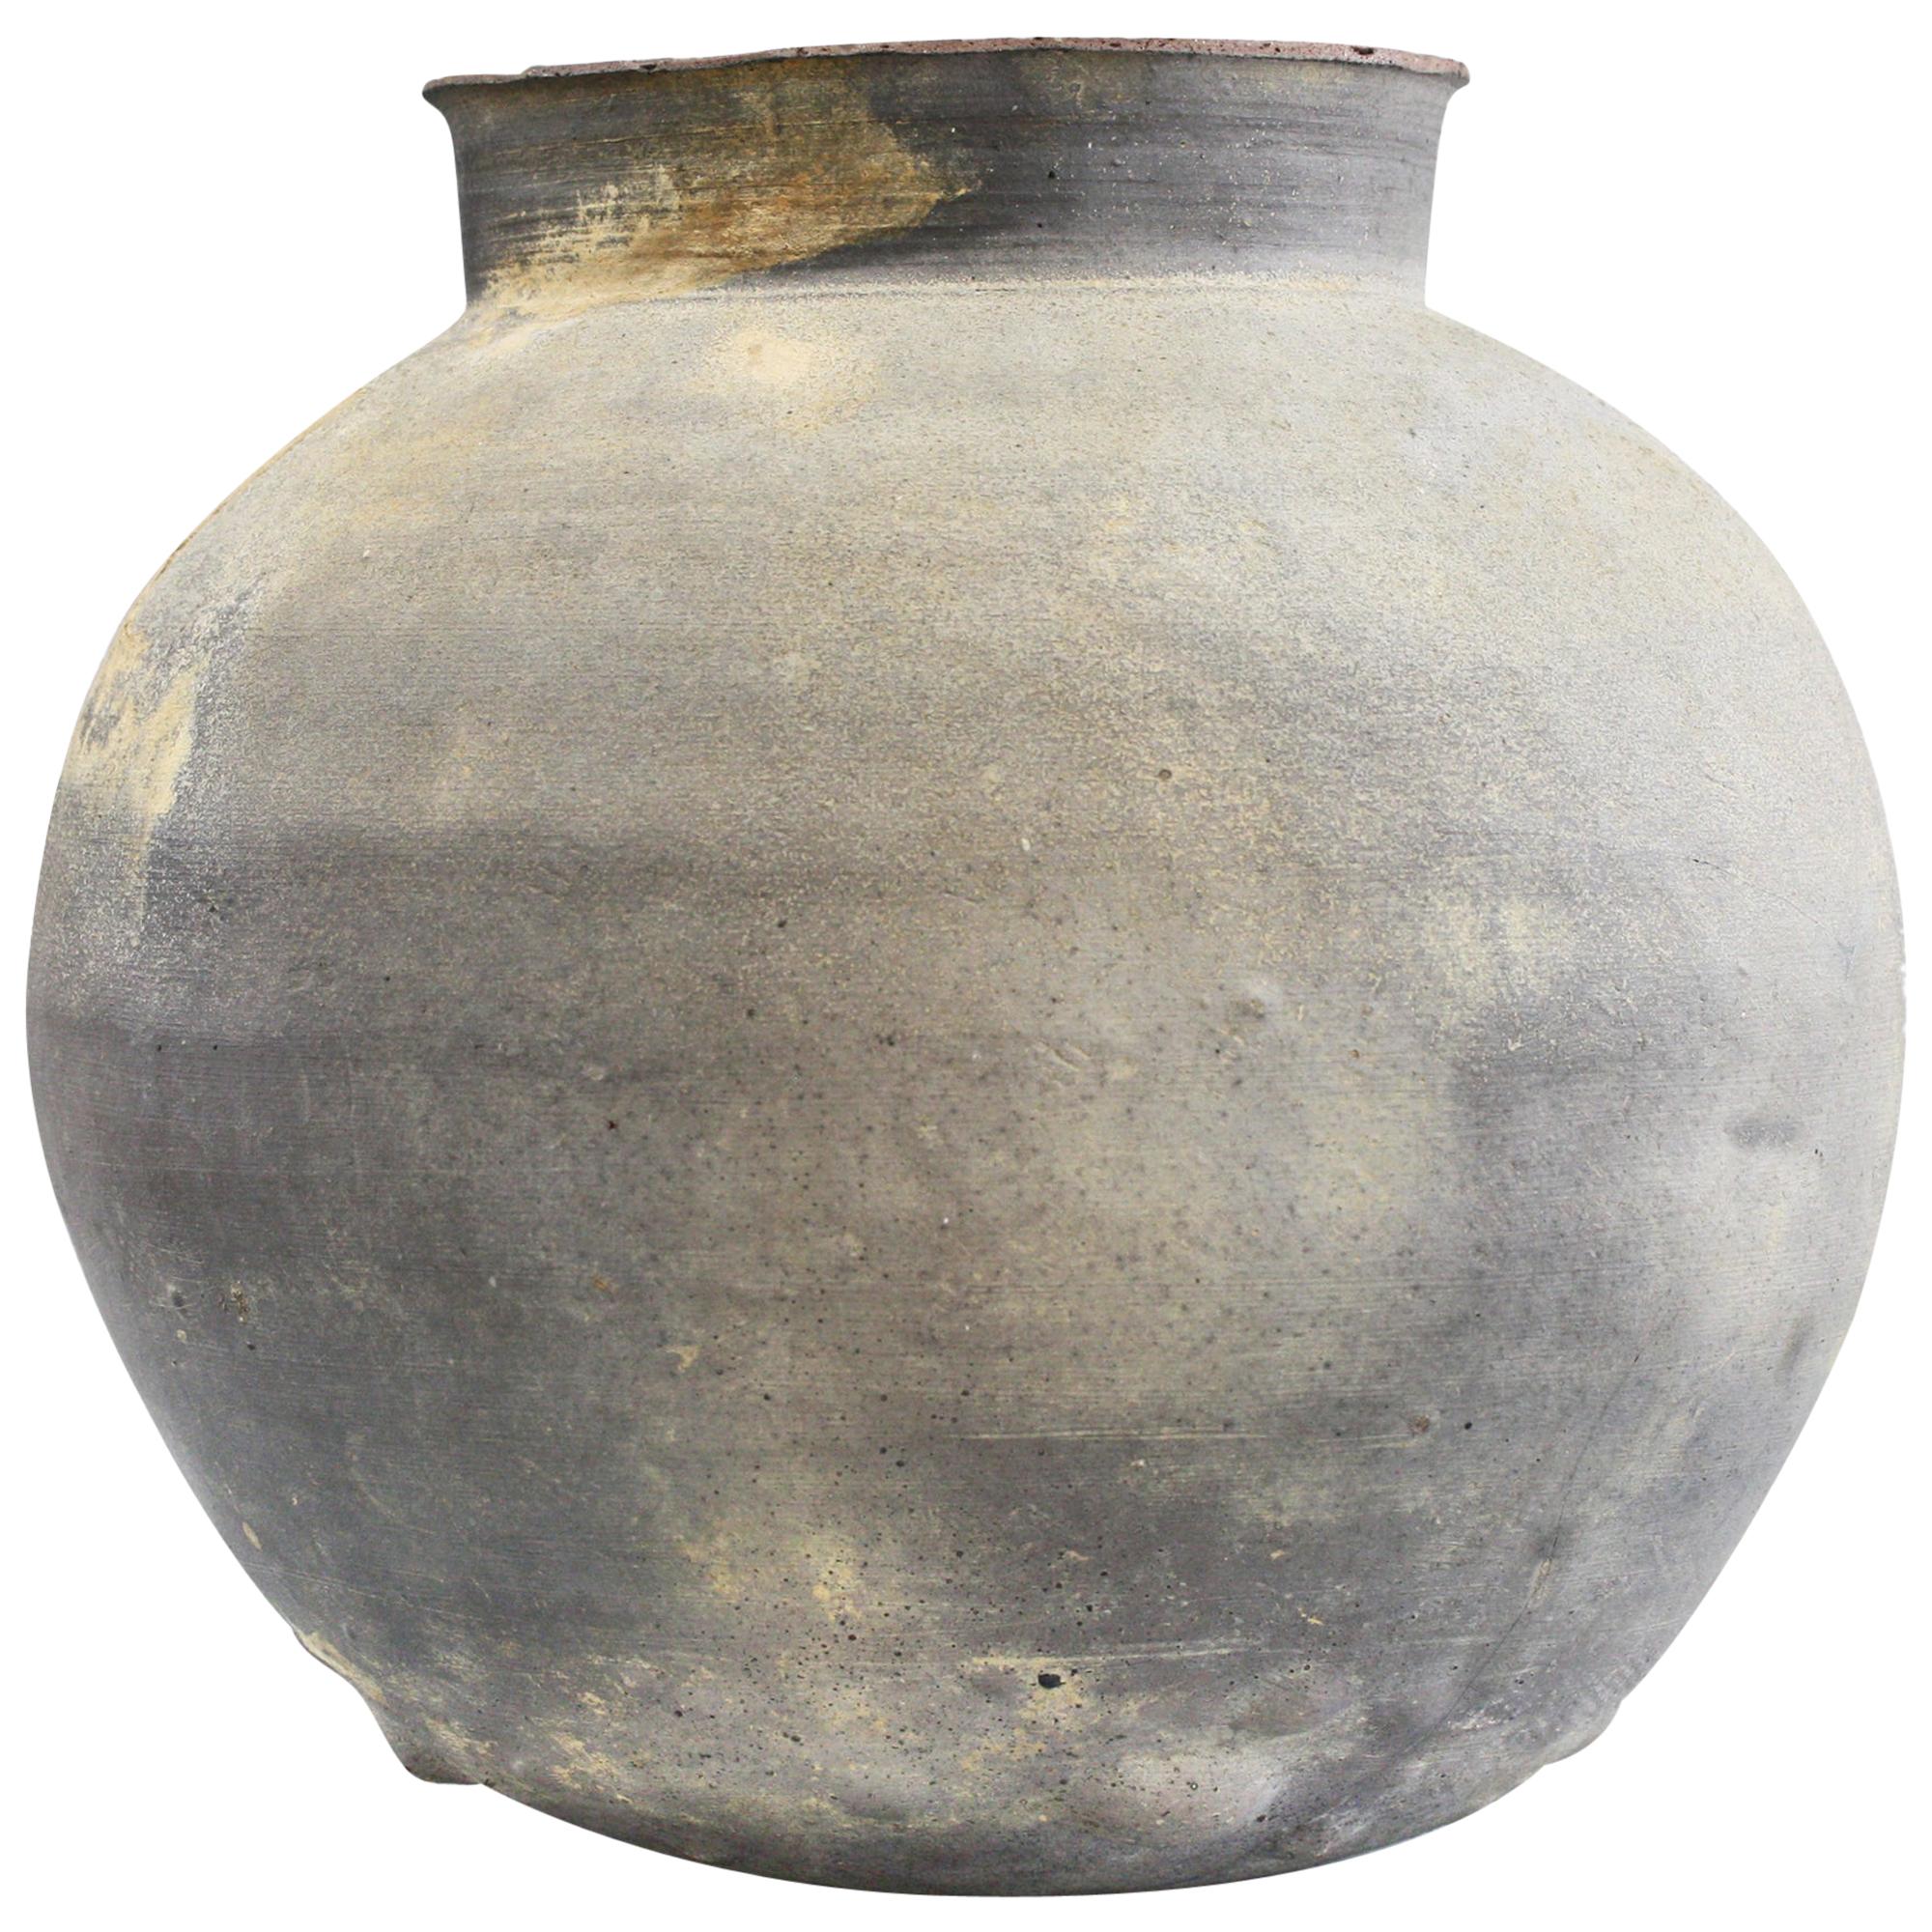 Chinese Han Dynasty Ash Glazed Pottery Jar 206BC-220AD